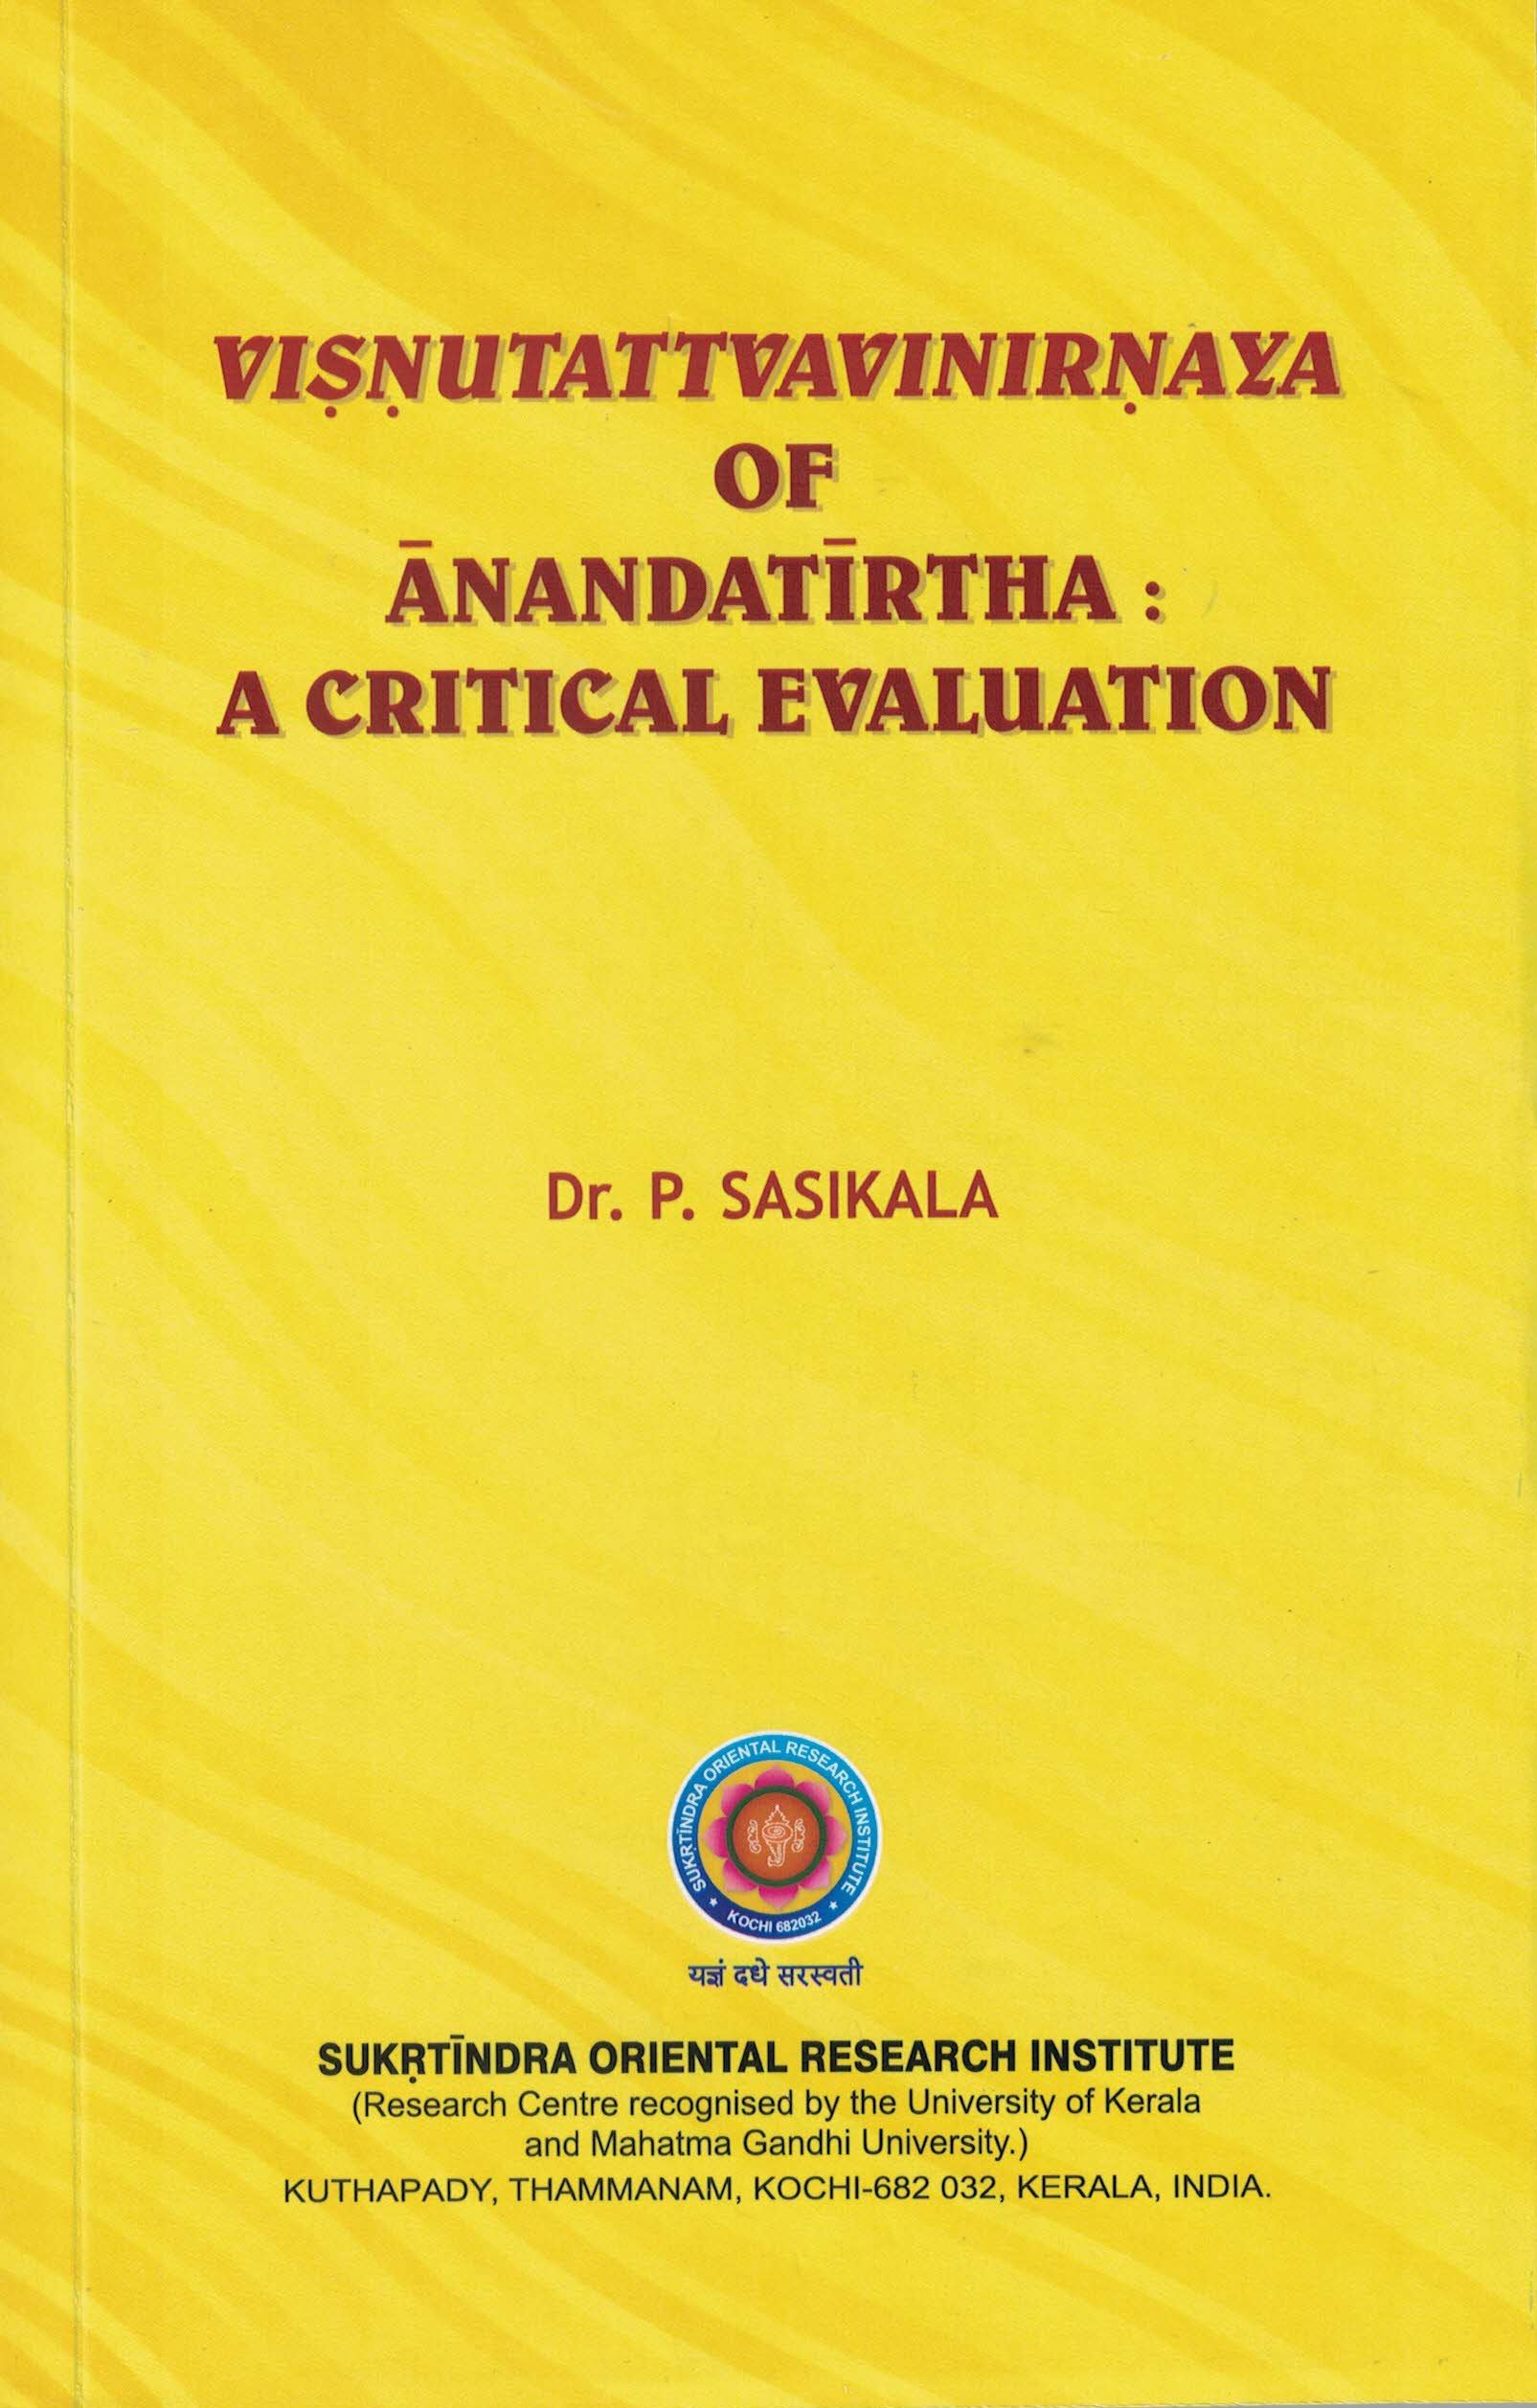 Visnutattvavinirnaya of Anandatirtha : A Critical Evaluation